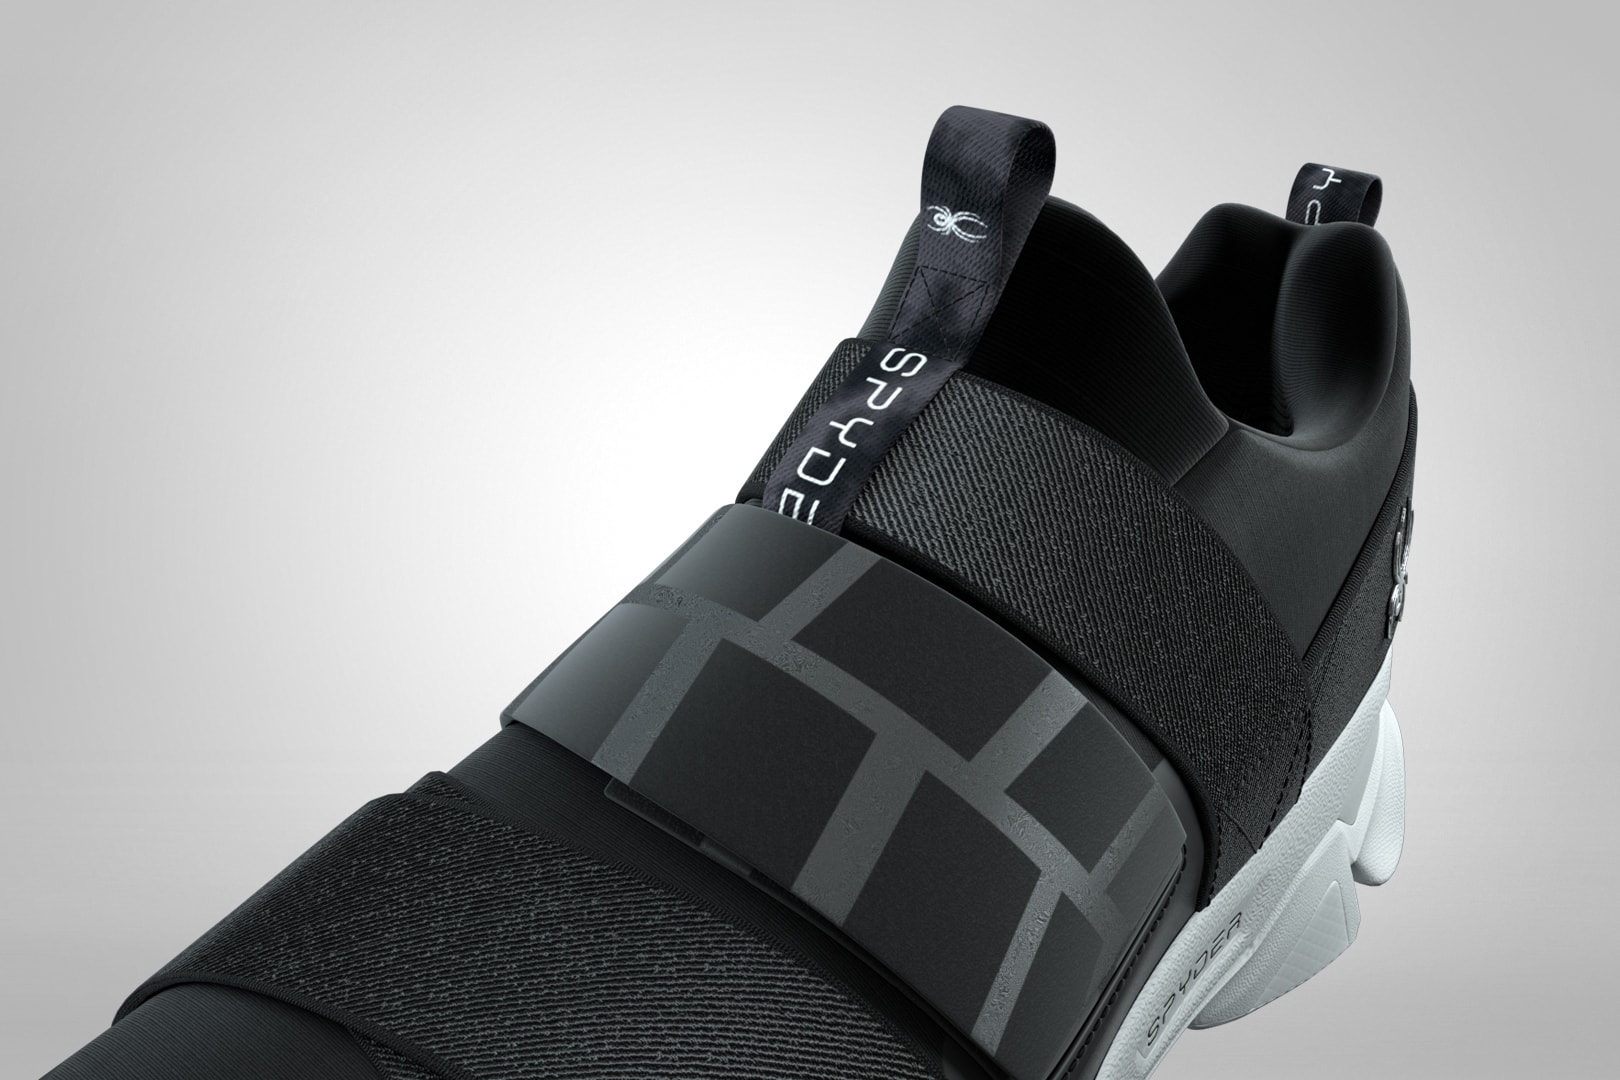 SPYDER Upgrades BLACK WIDOW-R For 2016 Fall Winter All Black Strap Shoe